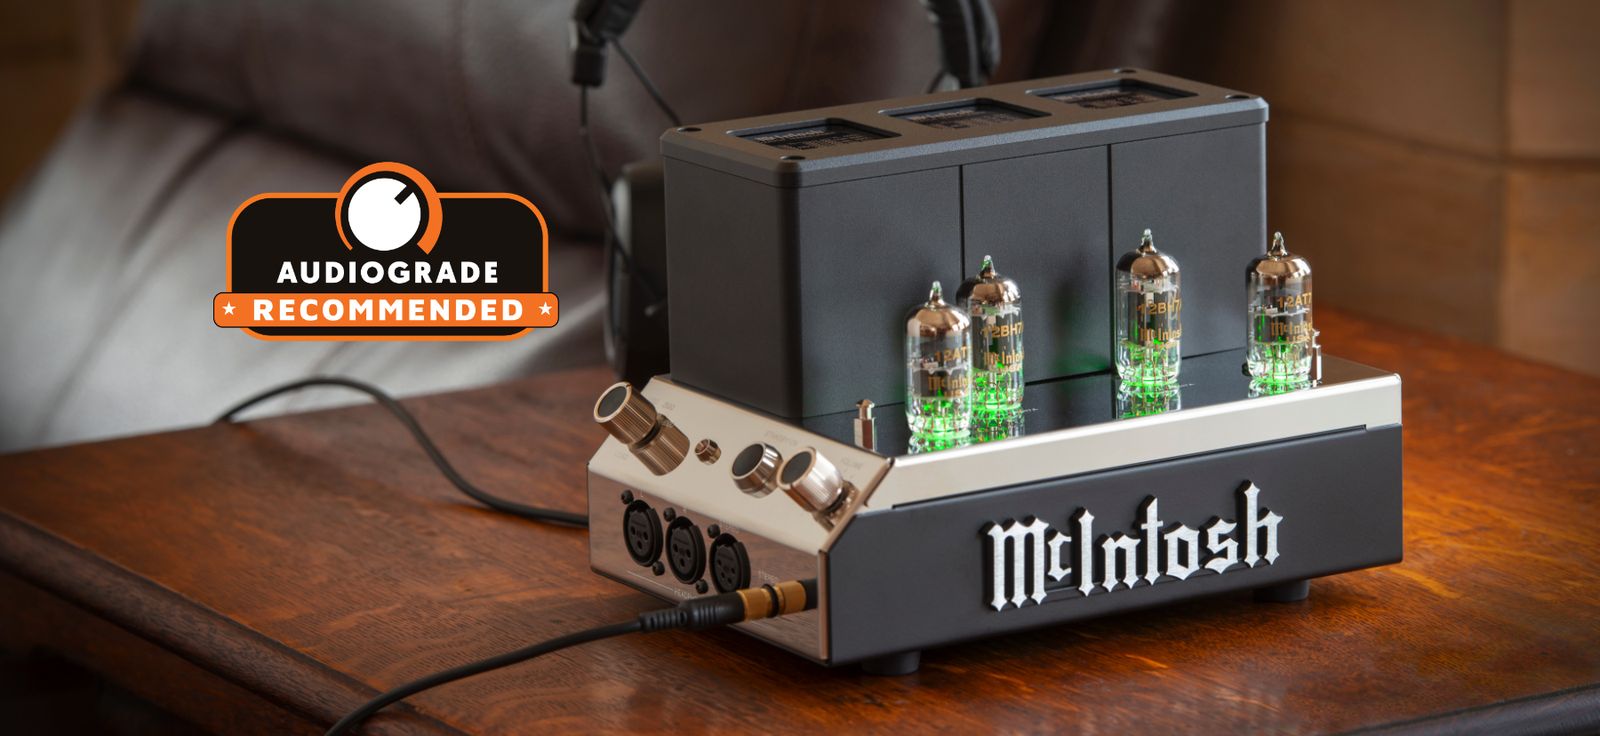 Audiograde reviews the McIntosh MHA200 headphone amplifier